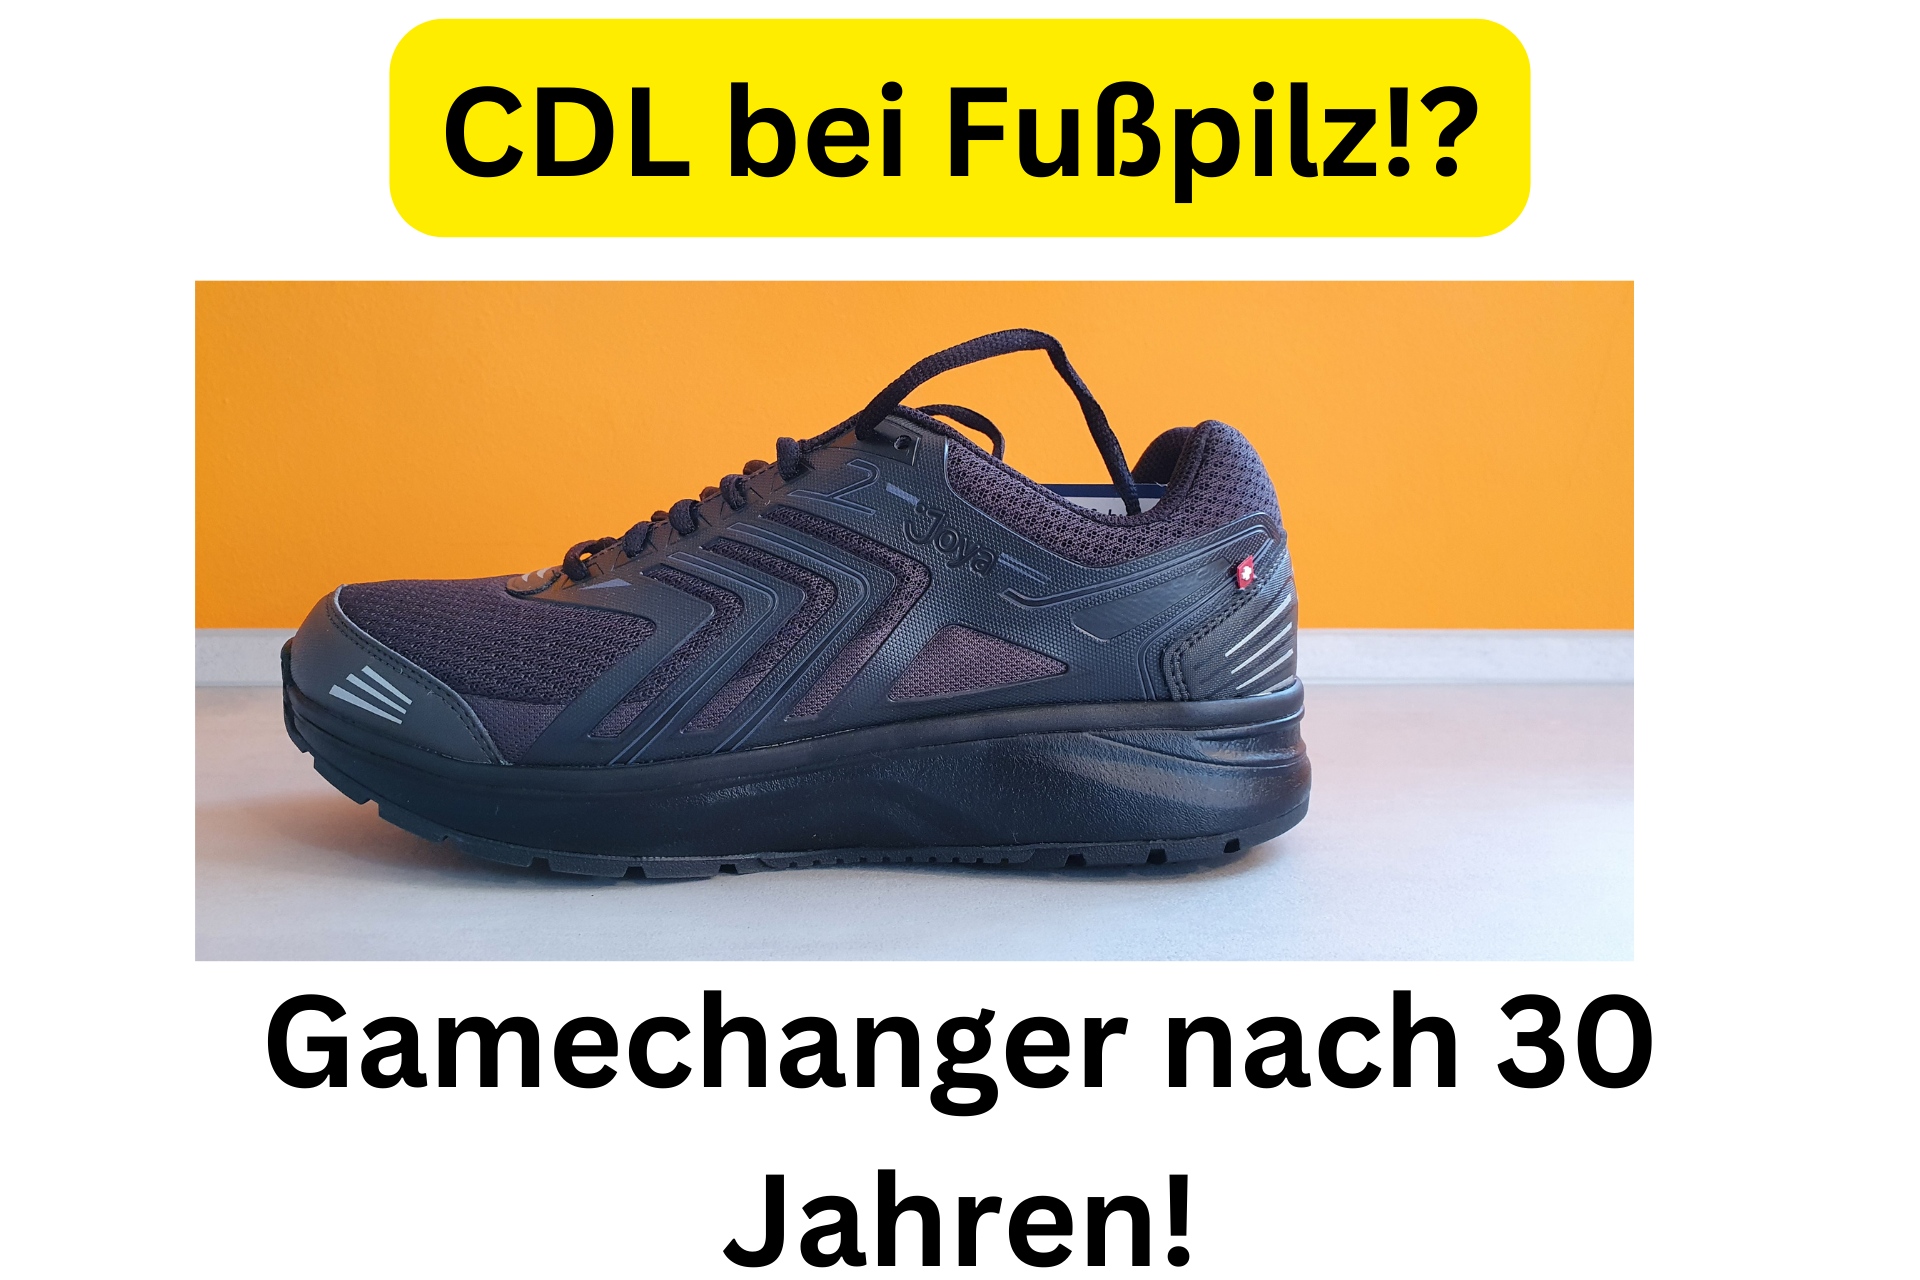 CDL Behandlung gegen Fußpilz, der Gamechanger nach 30 Jahren!